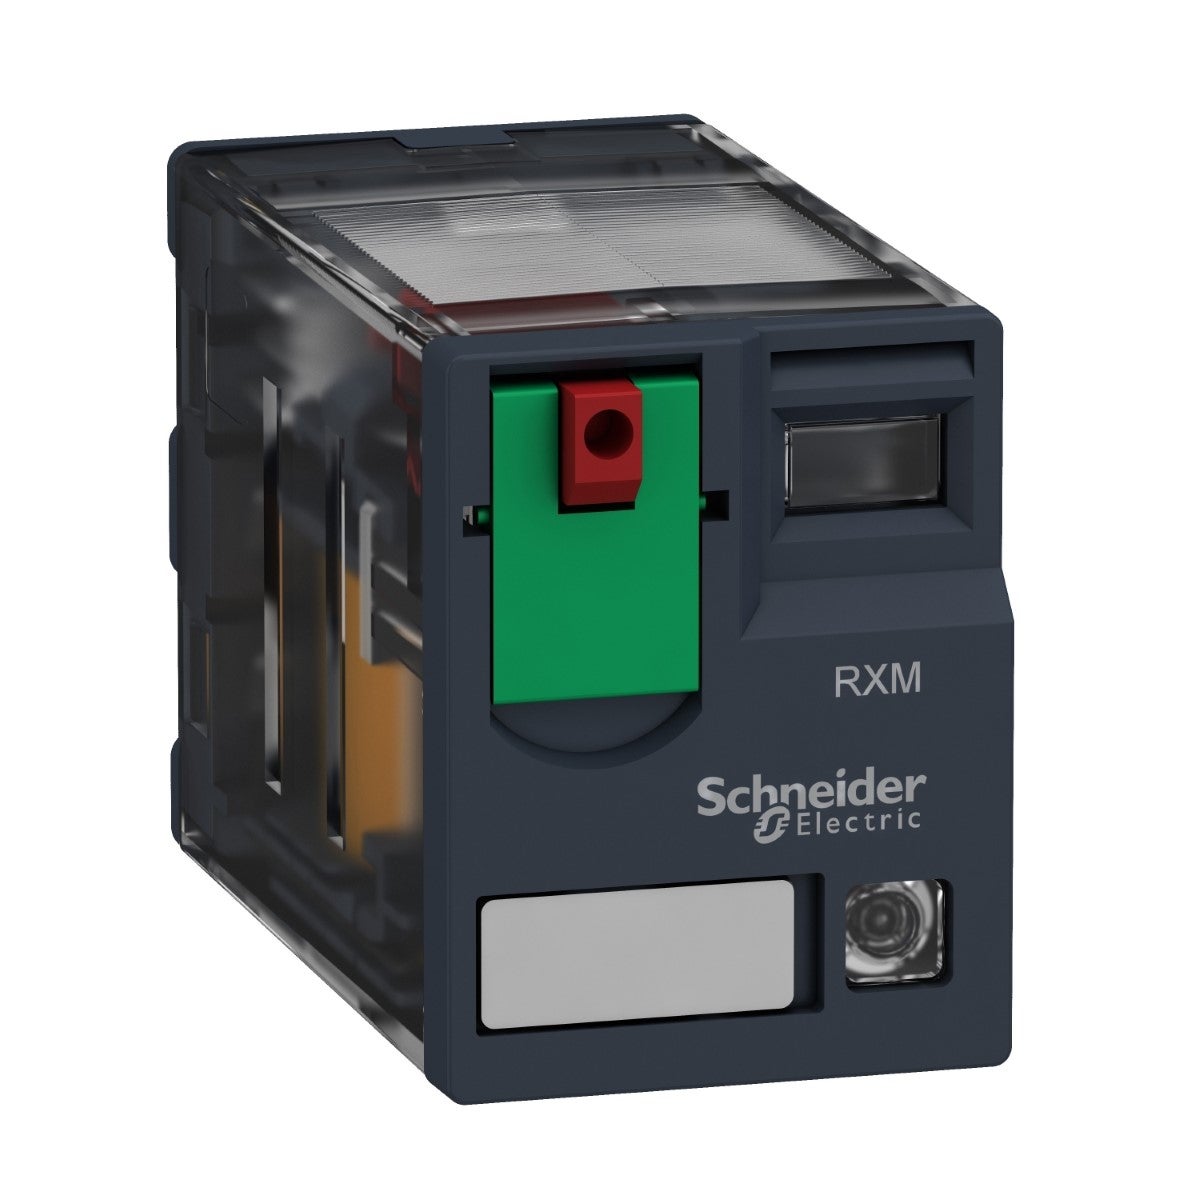 Schneider Electric Miniature Plug-in relay - Zelio RXM 4 C/O 120 V AC 6 A with LED